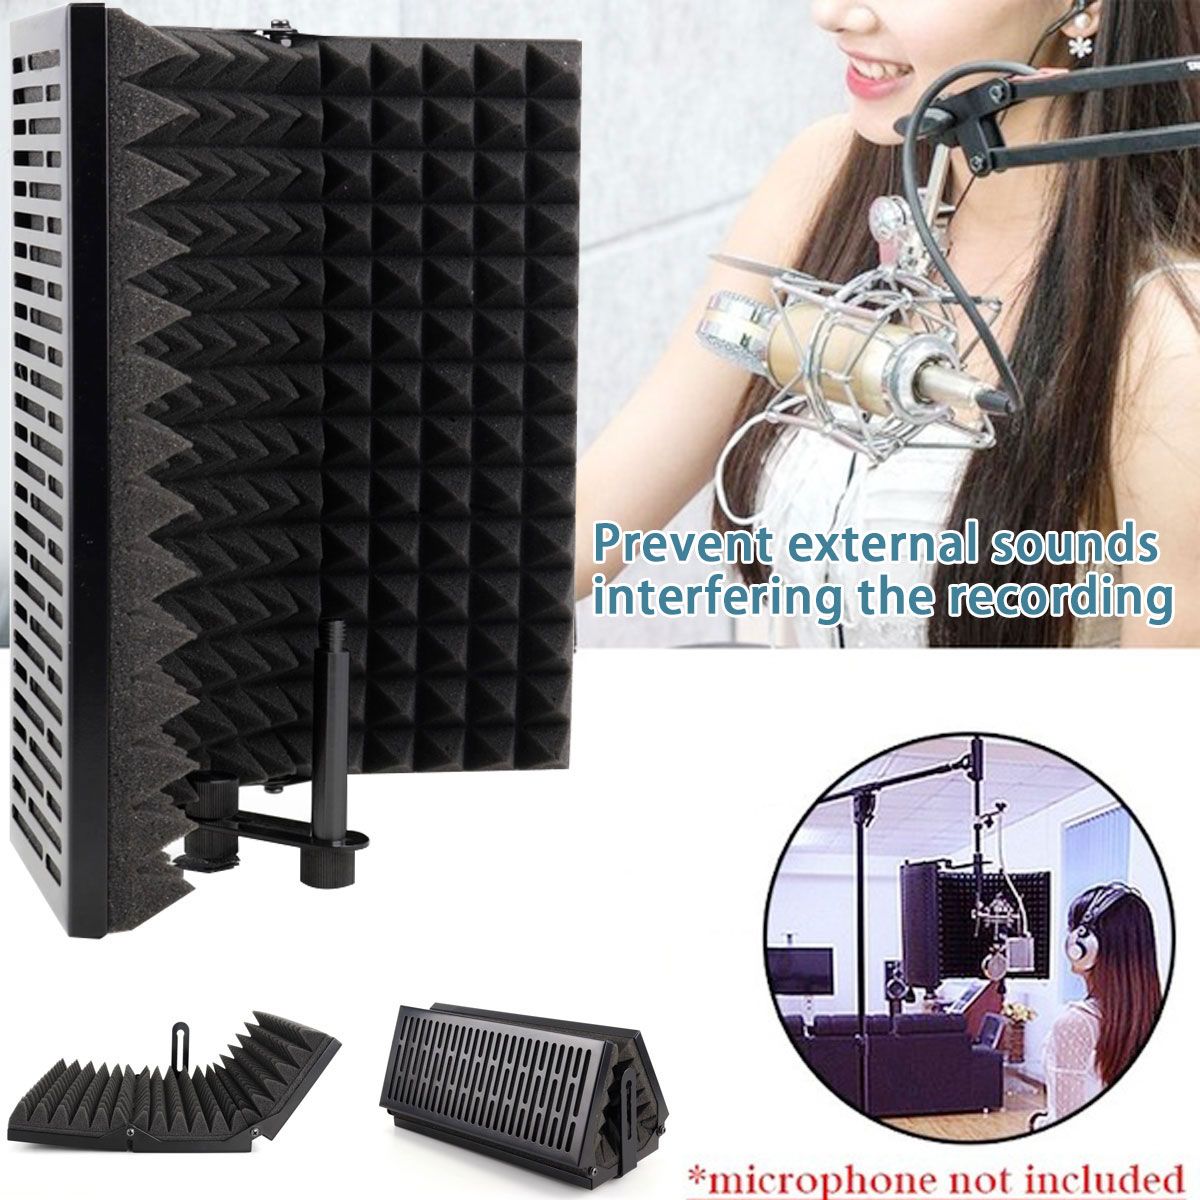 Studio-Microphone-Isolation-Shield-Recording-Foam-Panel-1514860